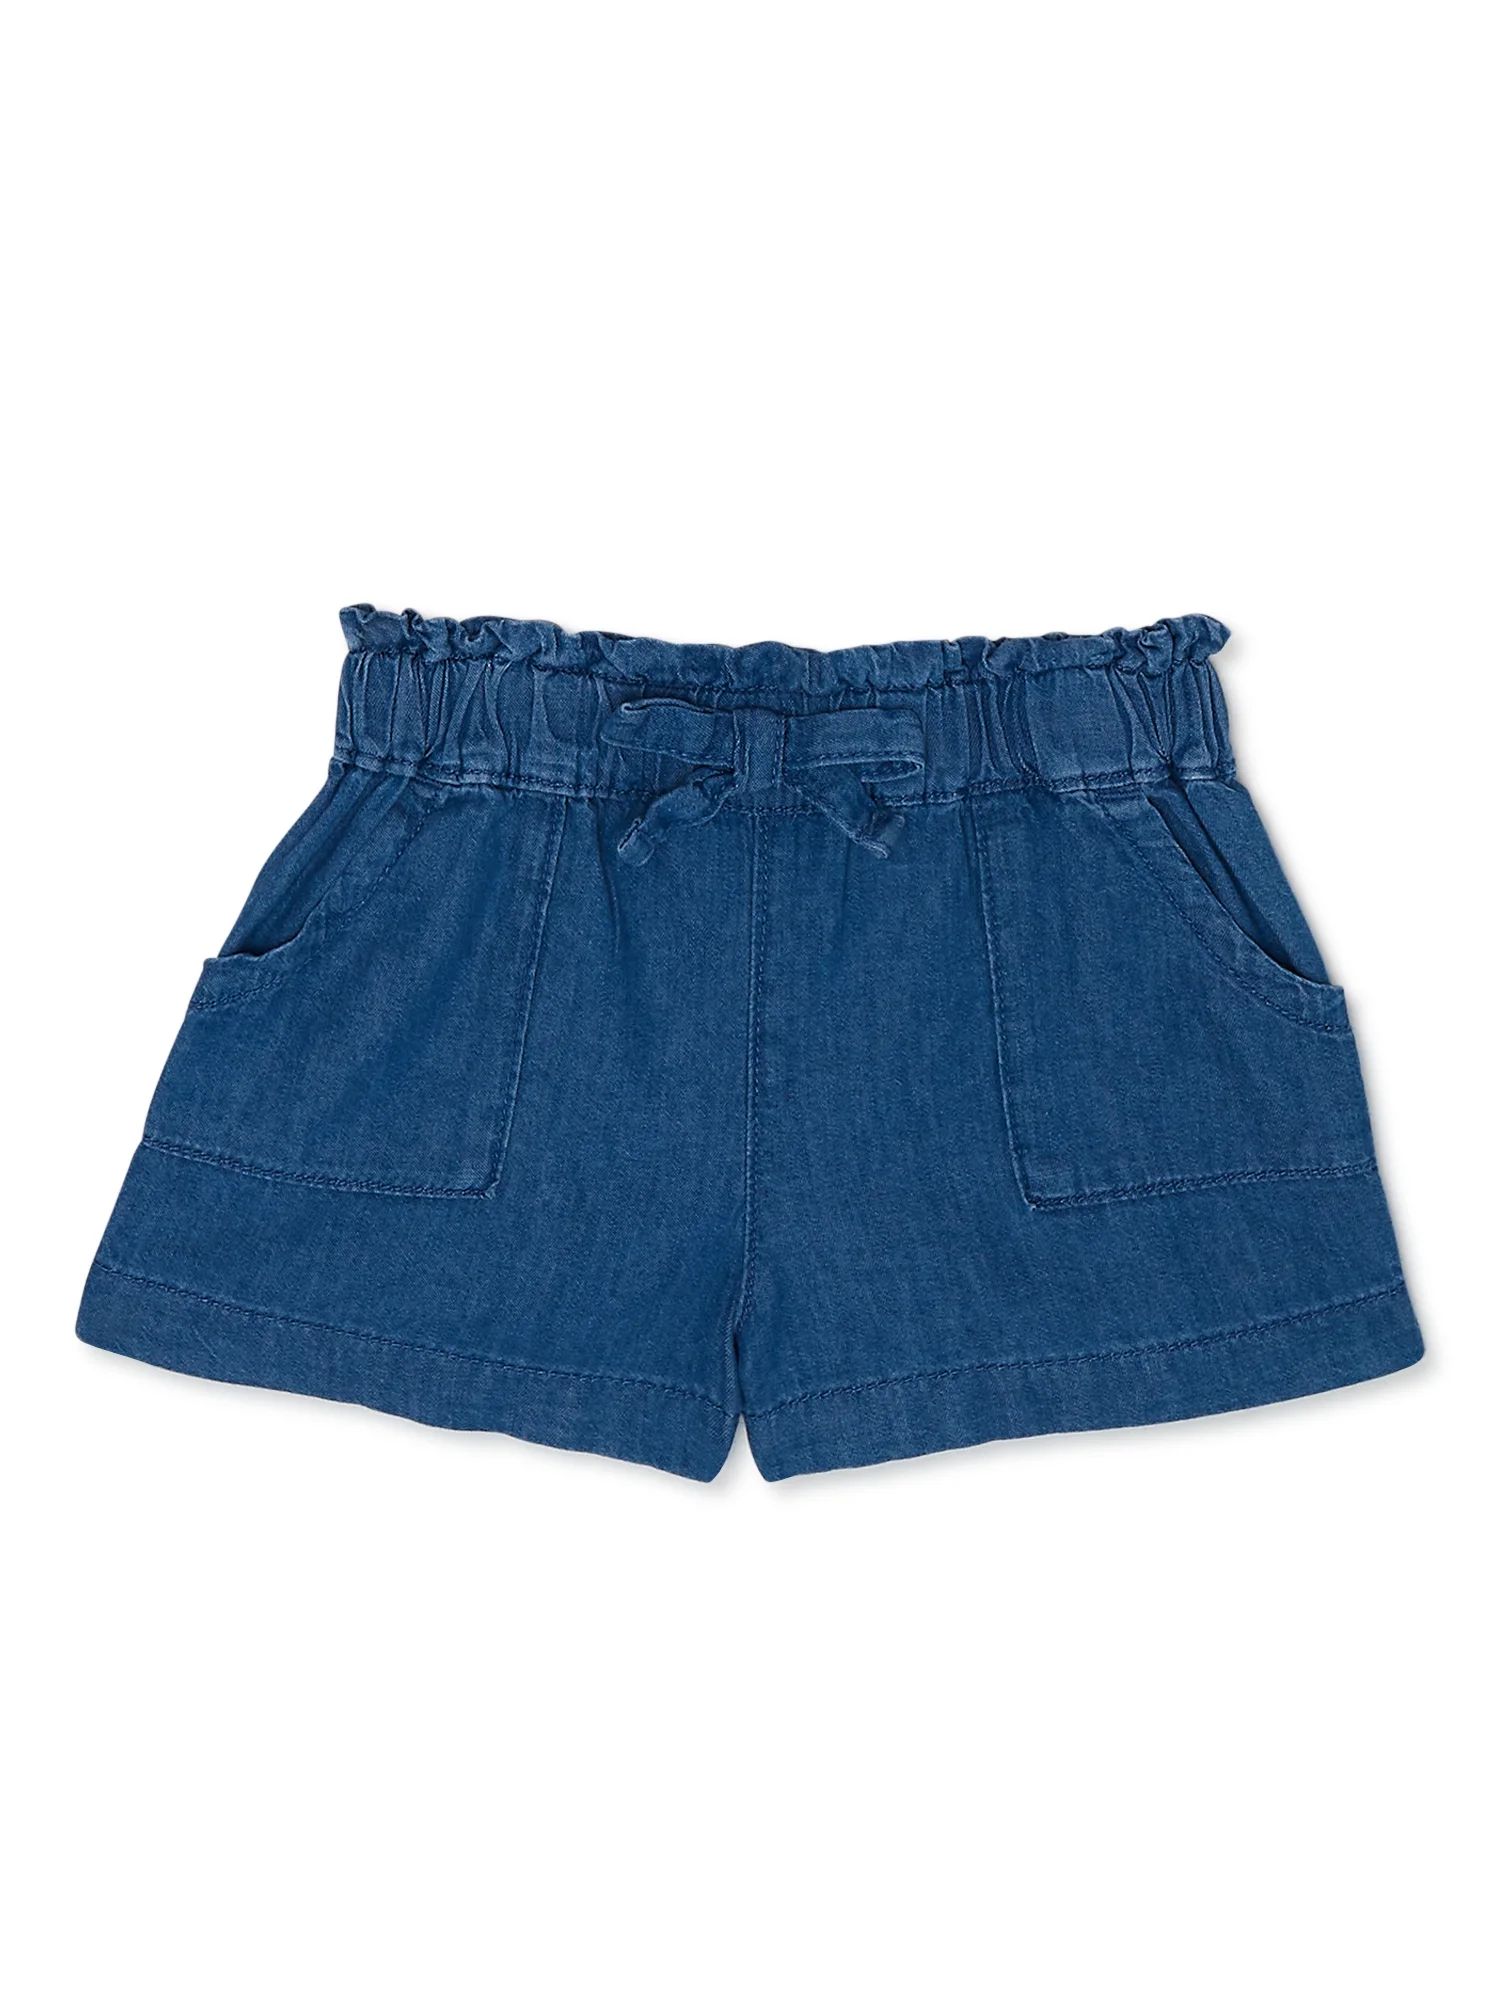 Garanimals Baby Girl Denim Paperbag Shorts, Sizes 0-24 Months | Walmart (US)